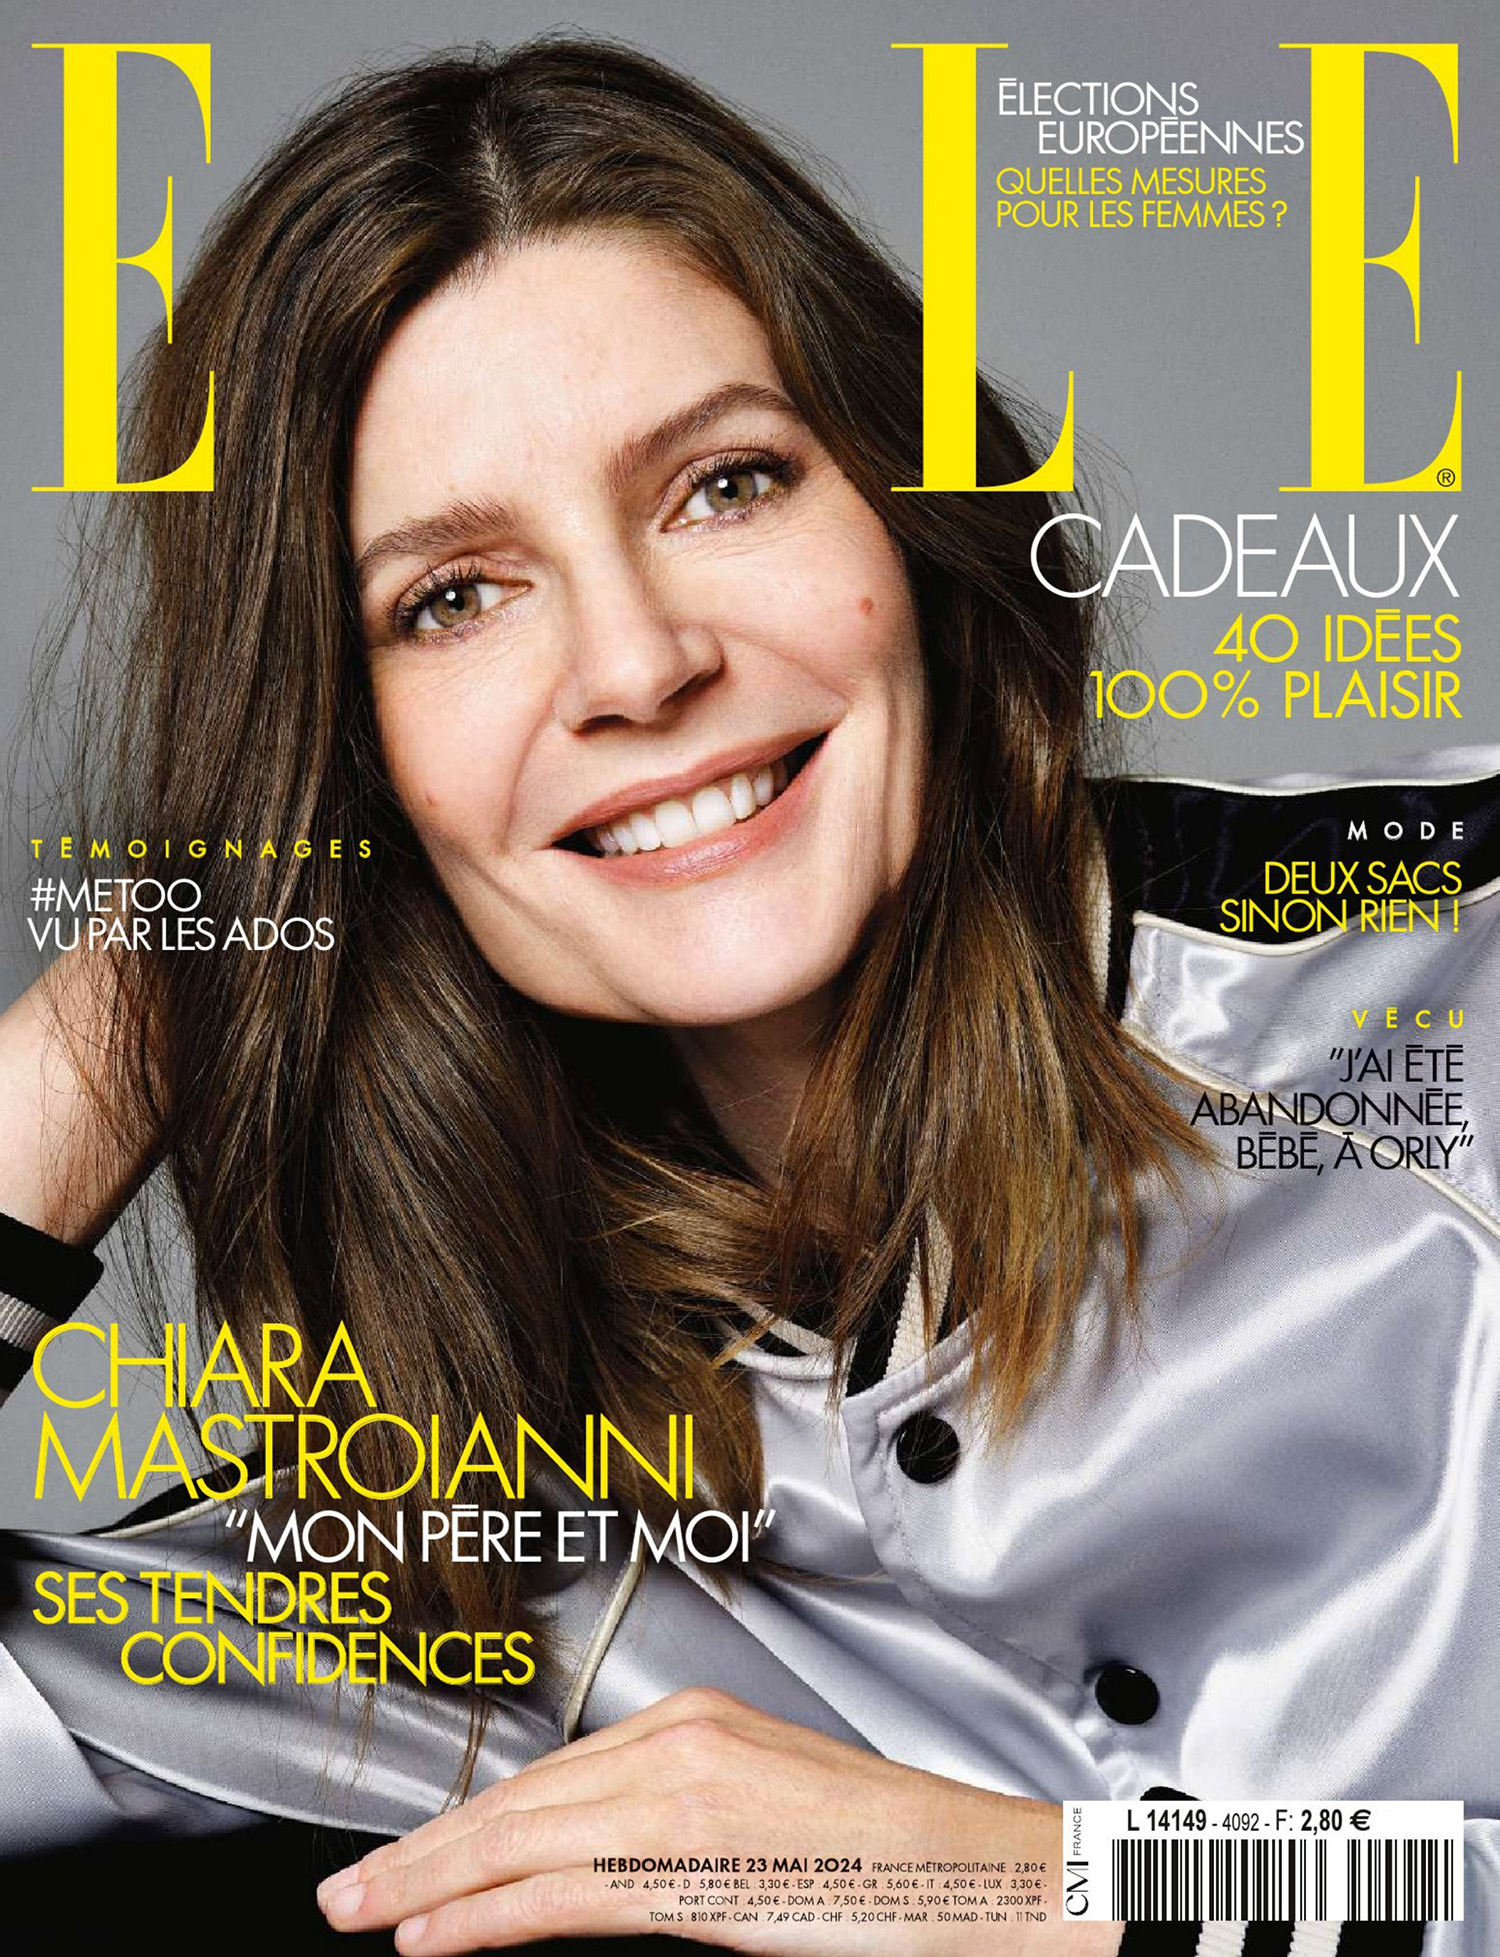 Chiara Mastroianni in Celine on Elle France May 23rd, 2024 by Dant Studio